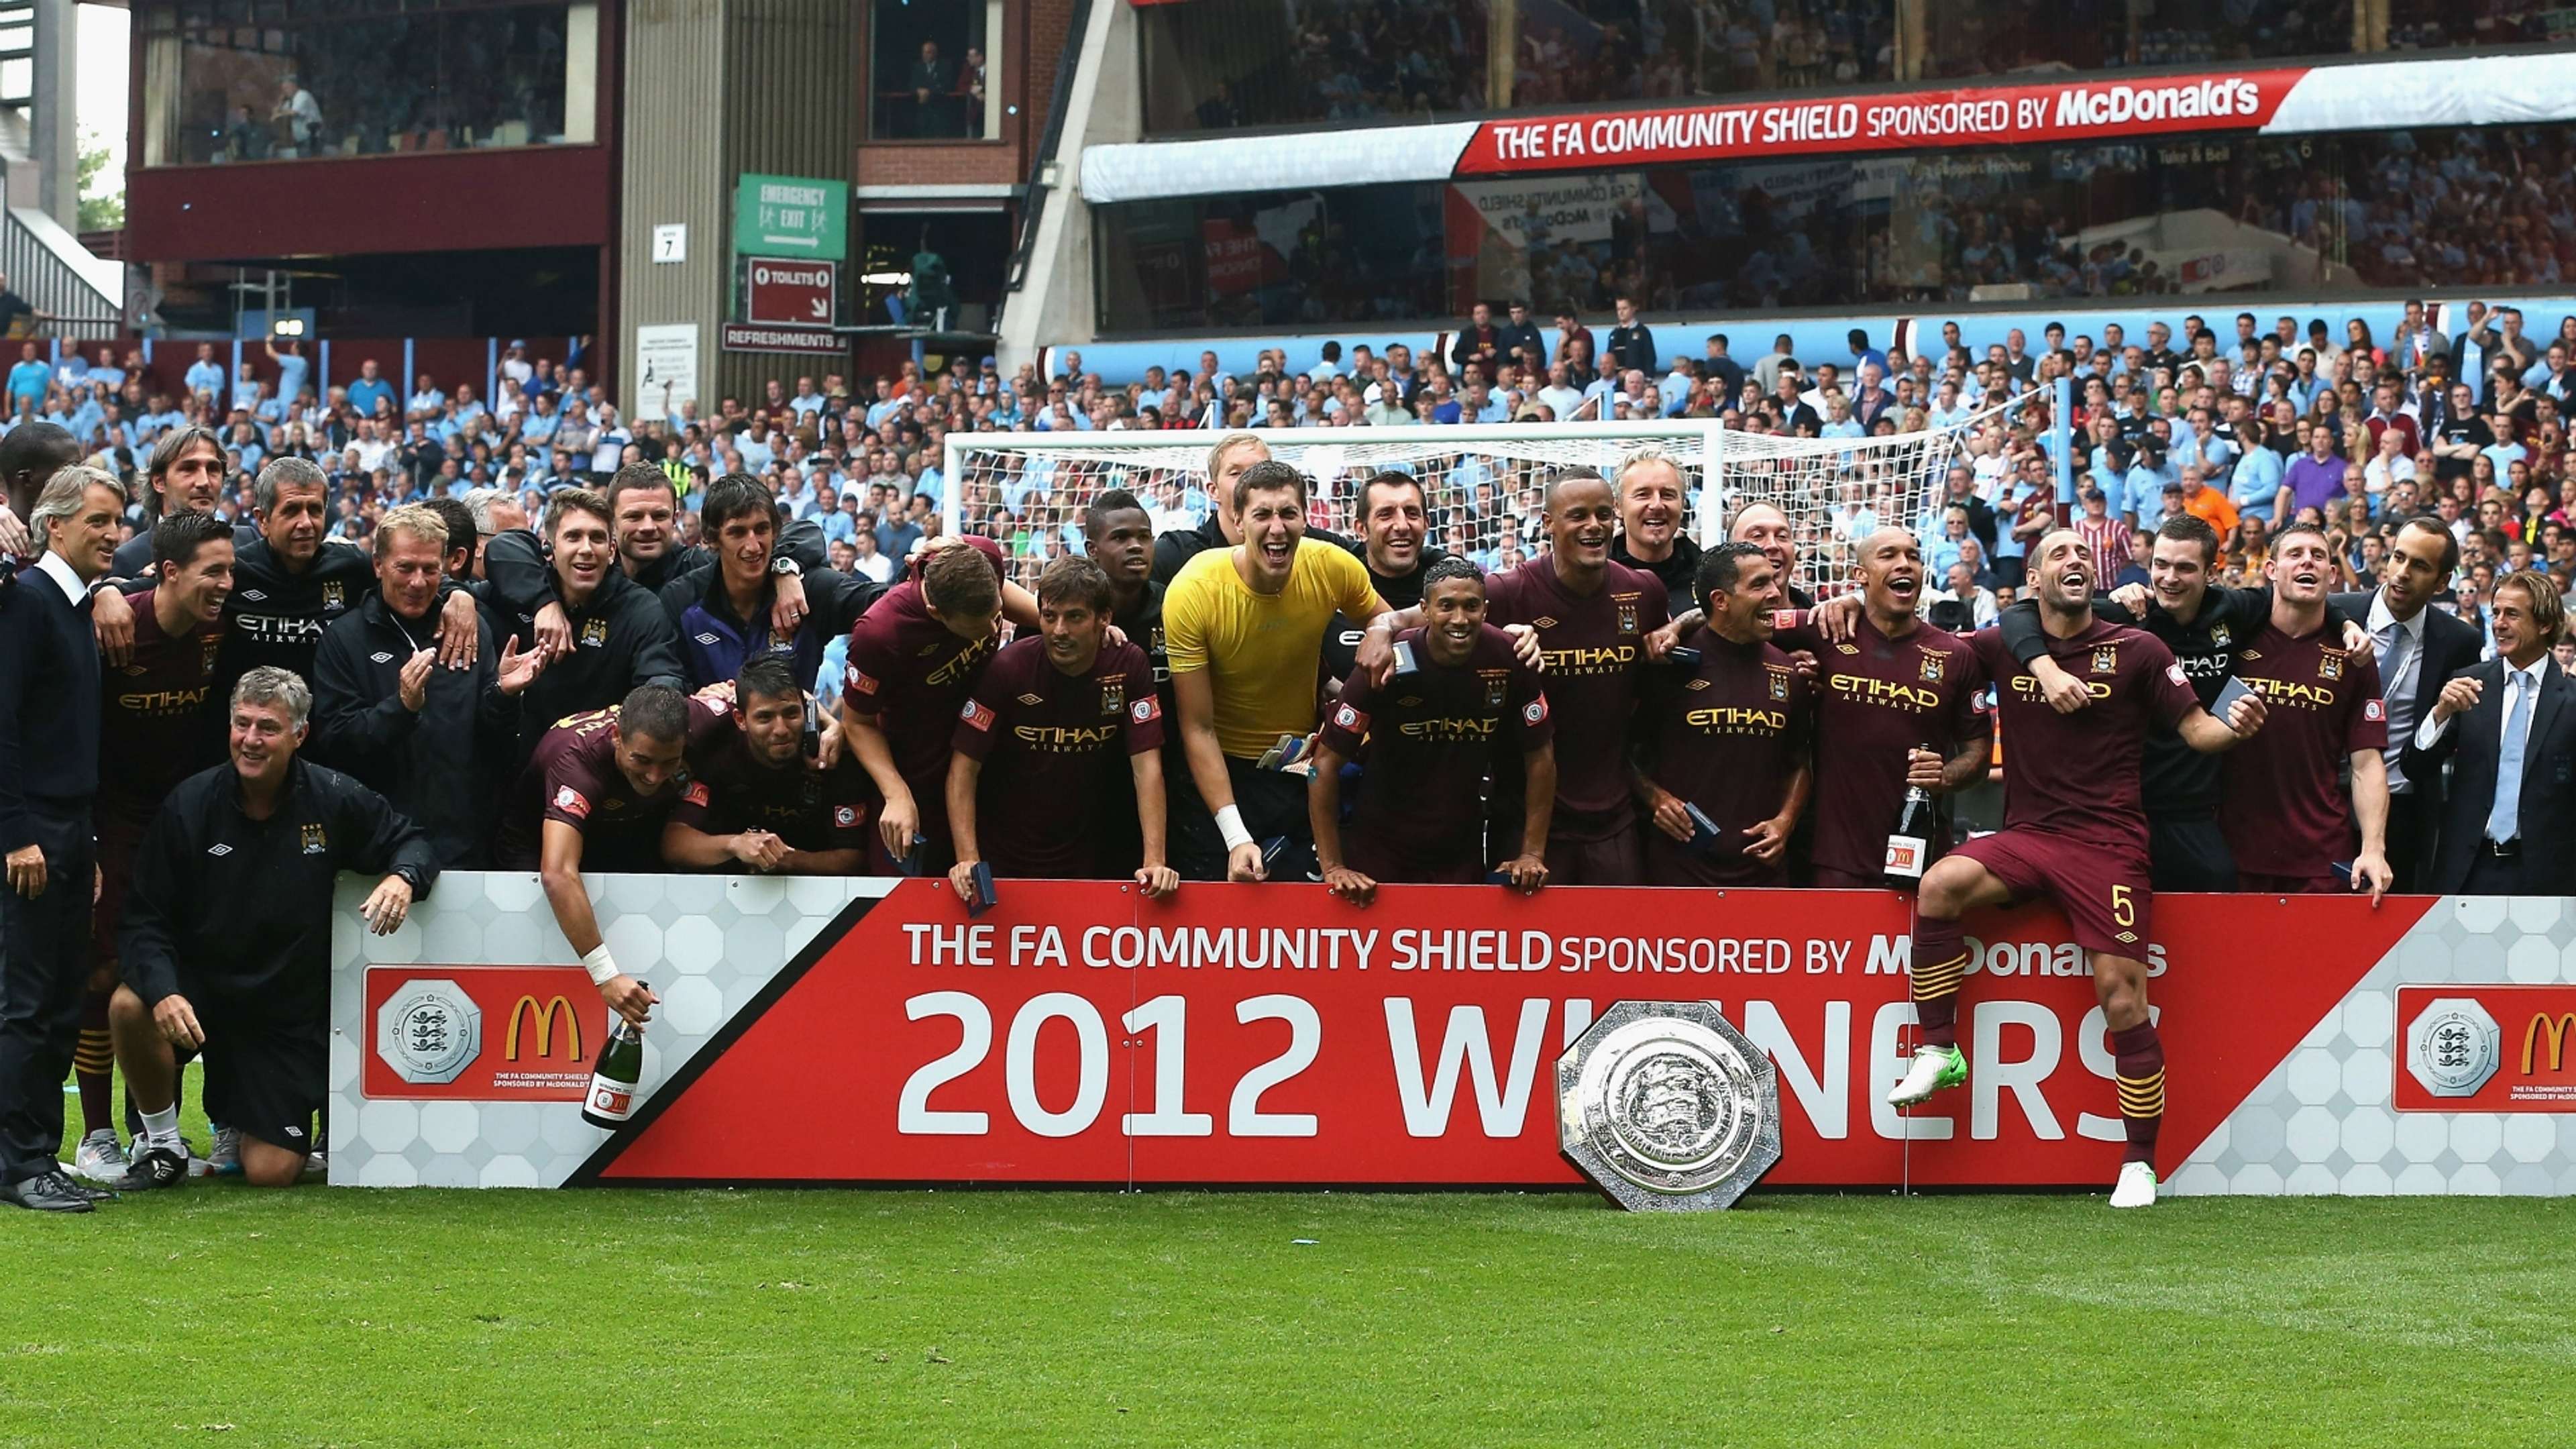 Manchester City Community Shield 2012